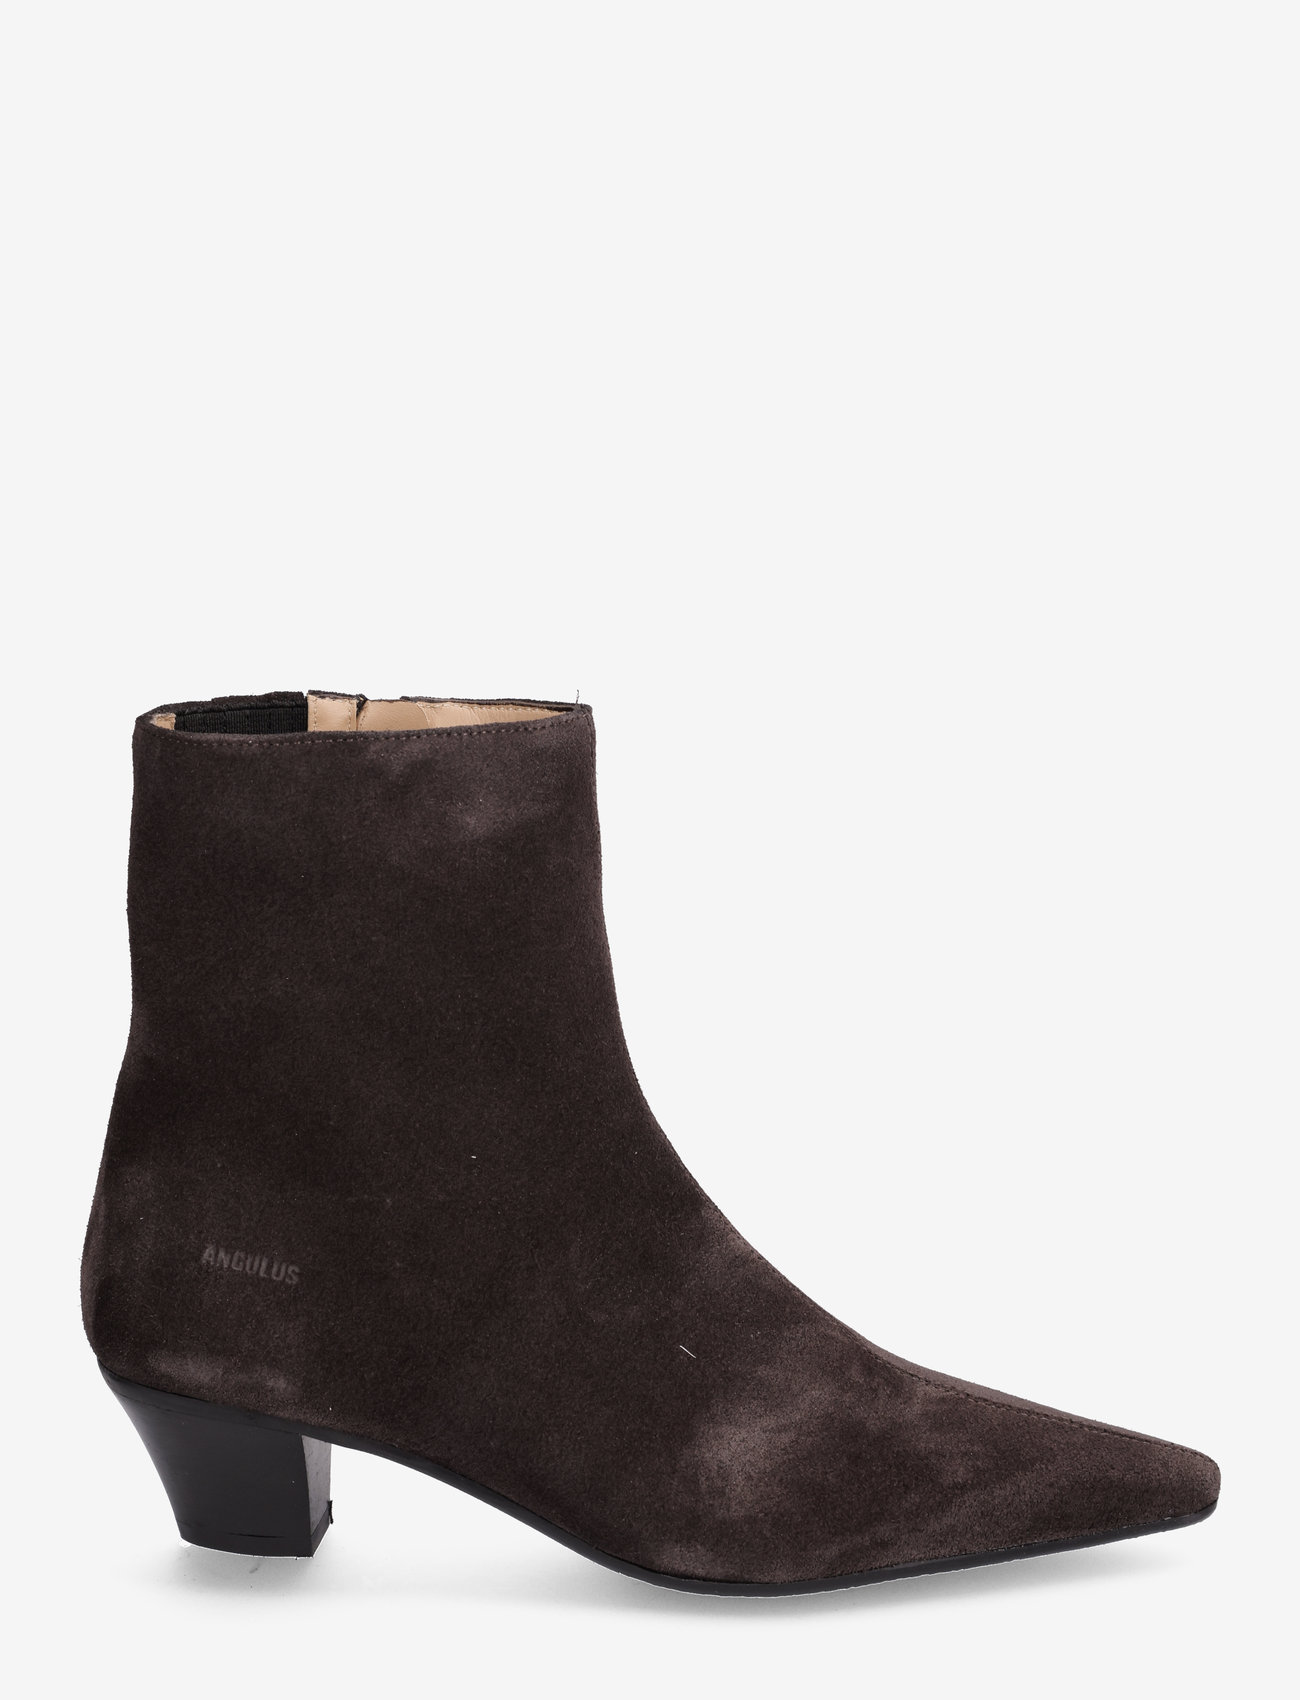 ANGULUS - Boots - Block heel with zipper - hög klack - 1716/001 espresso - 1